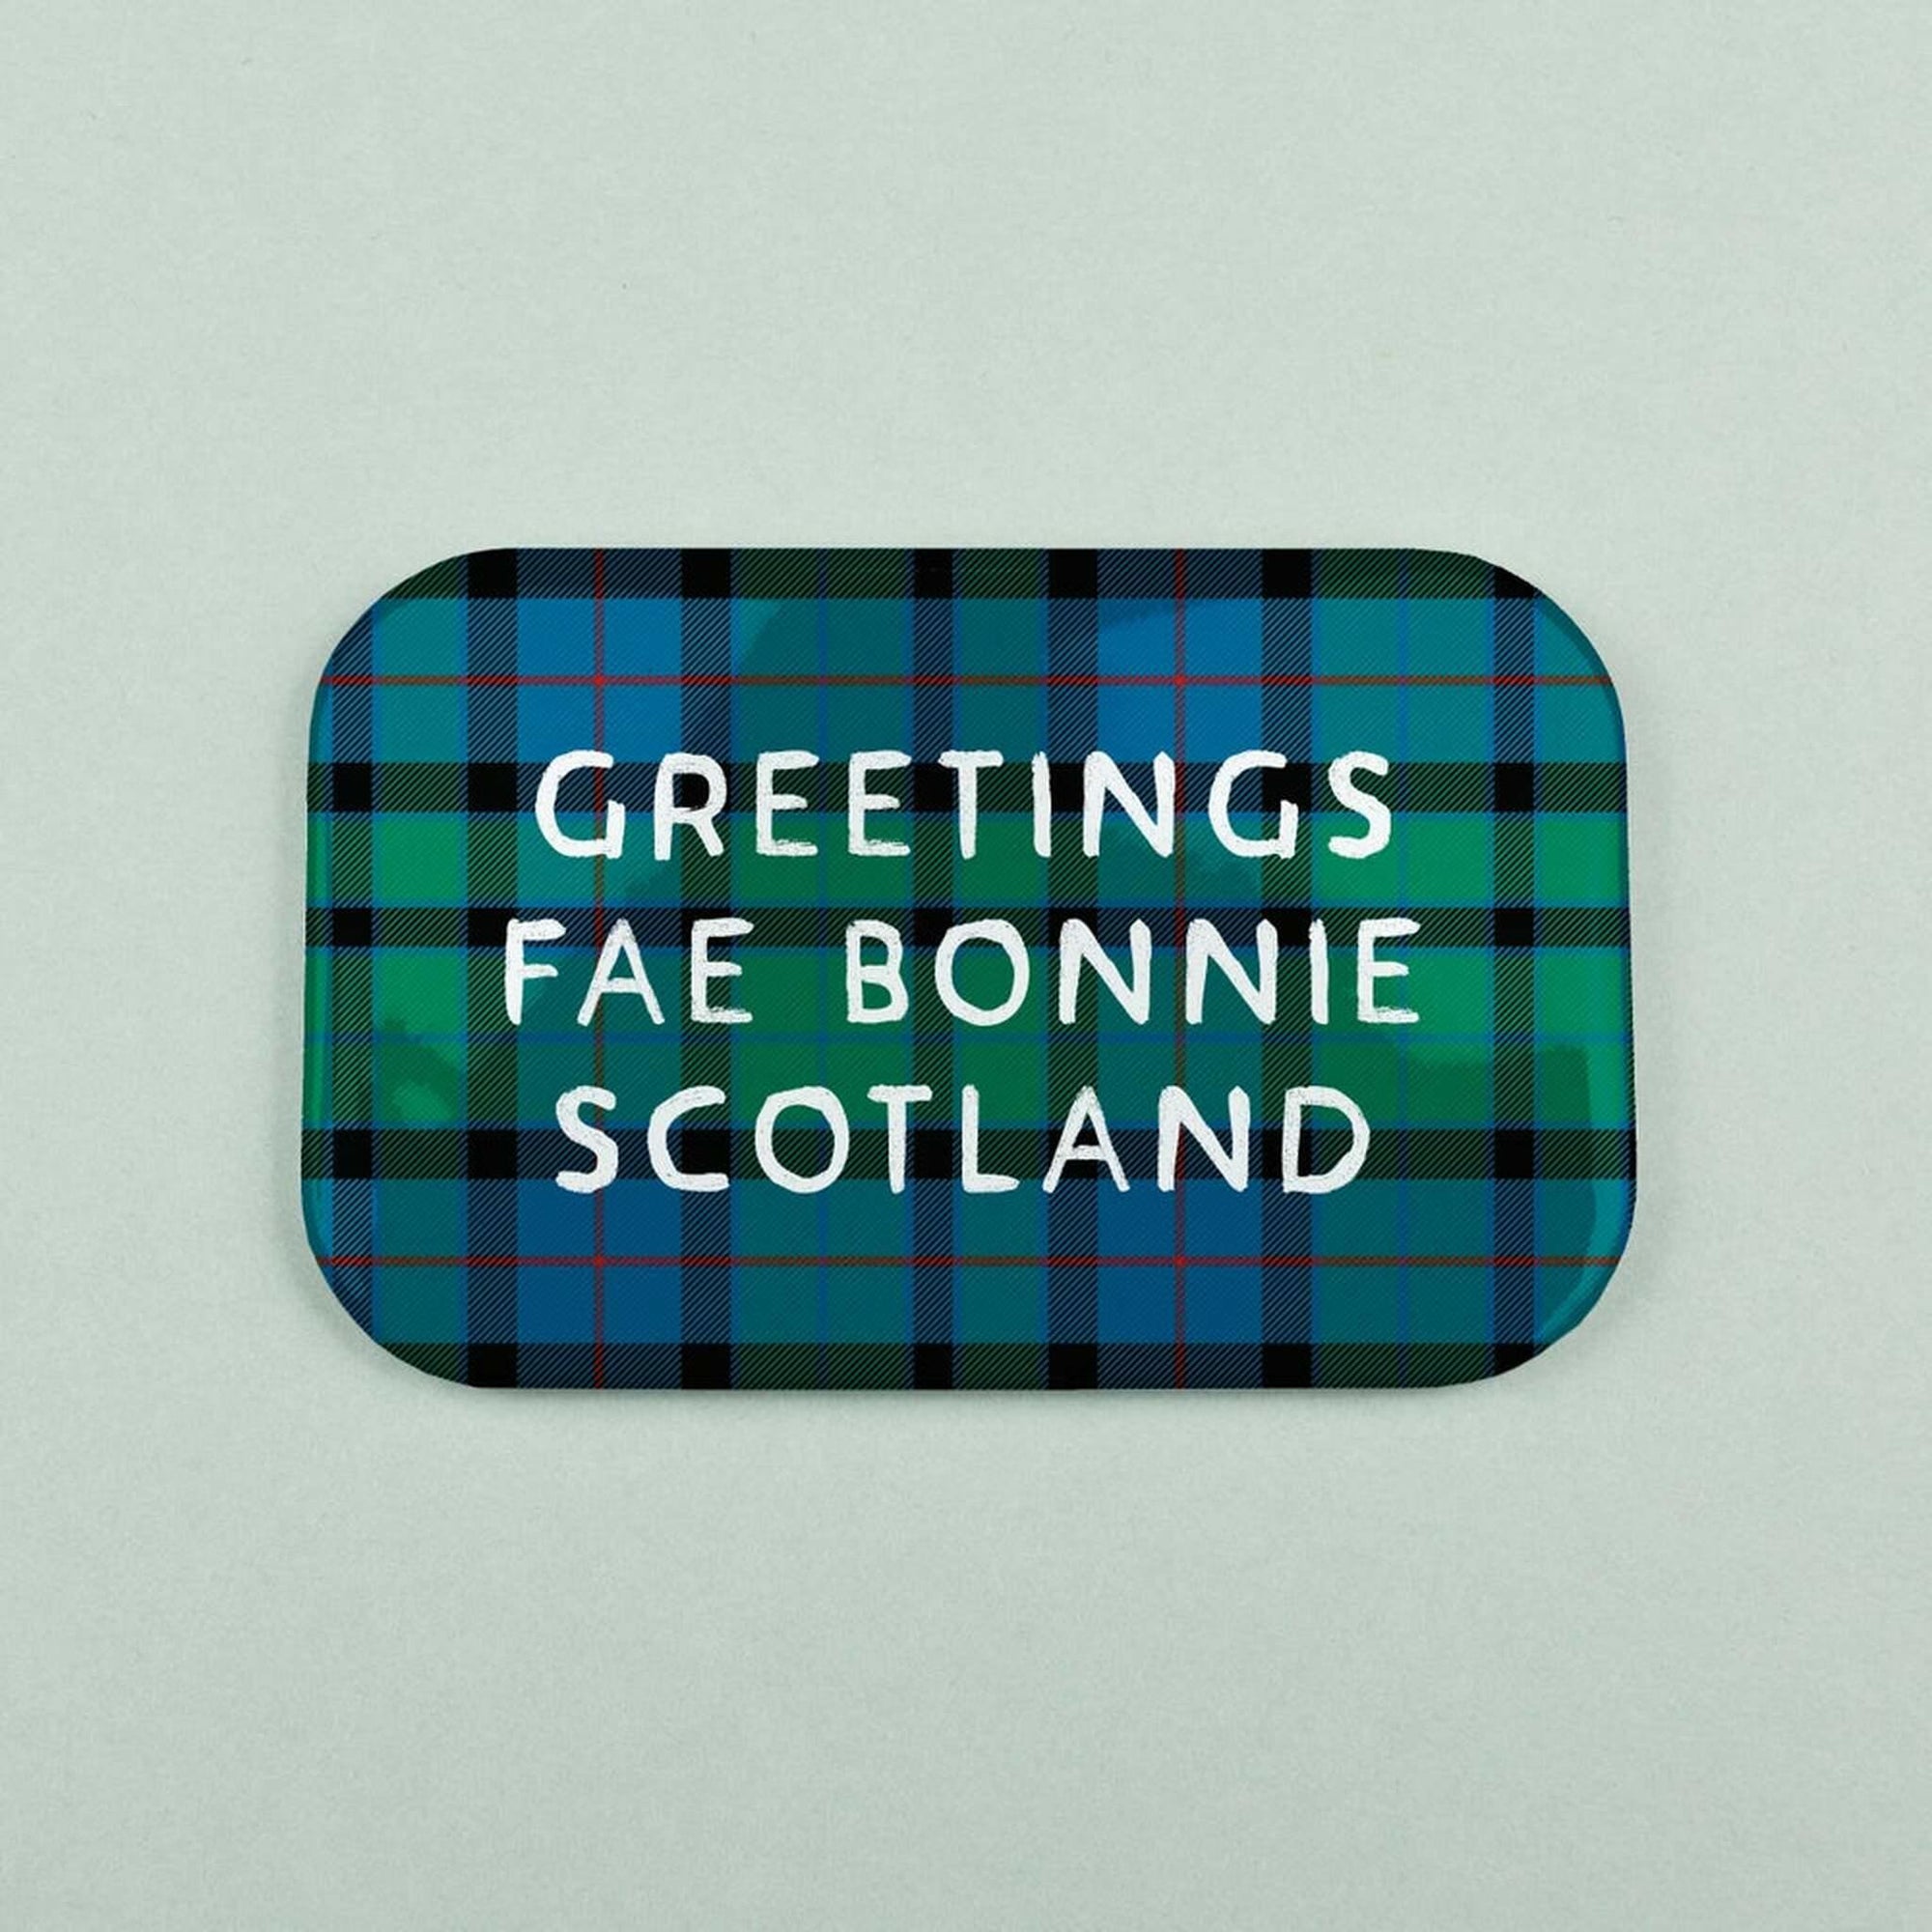 Greetings Fae Bonnie Scotland Magnet - Penny Black